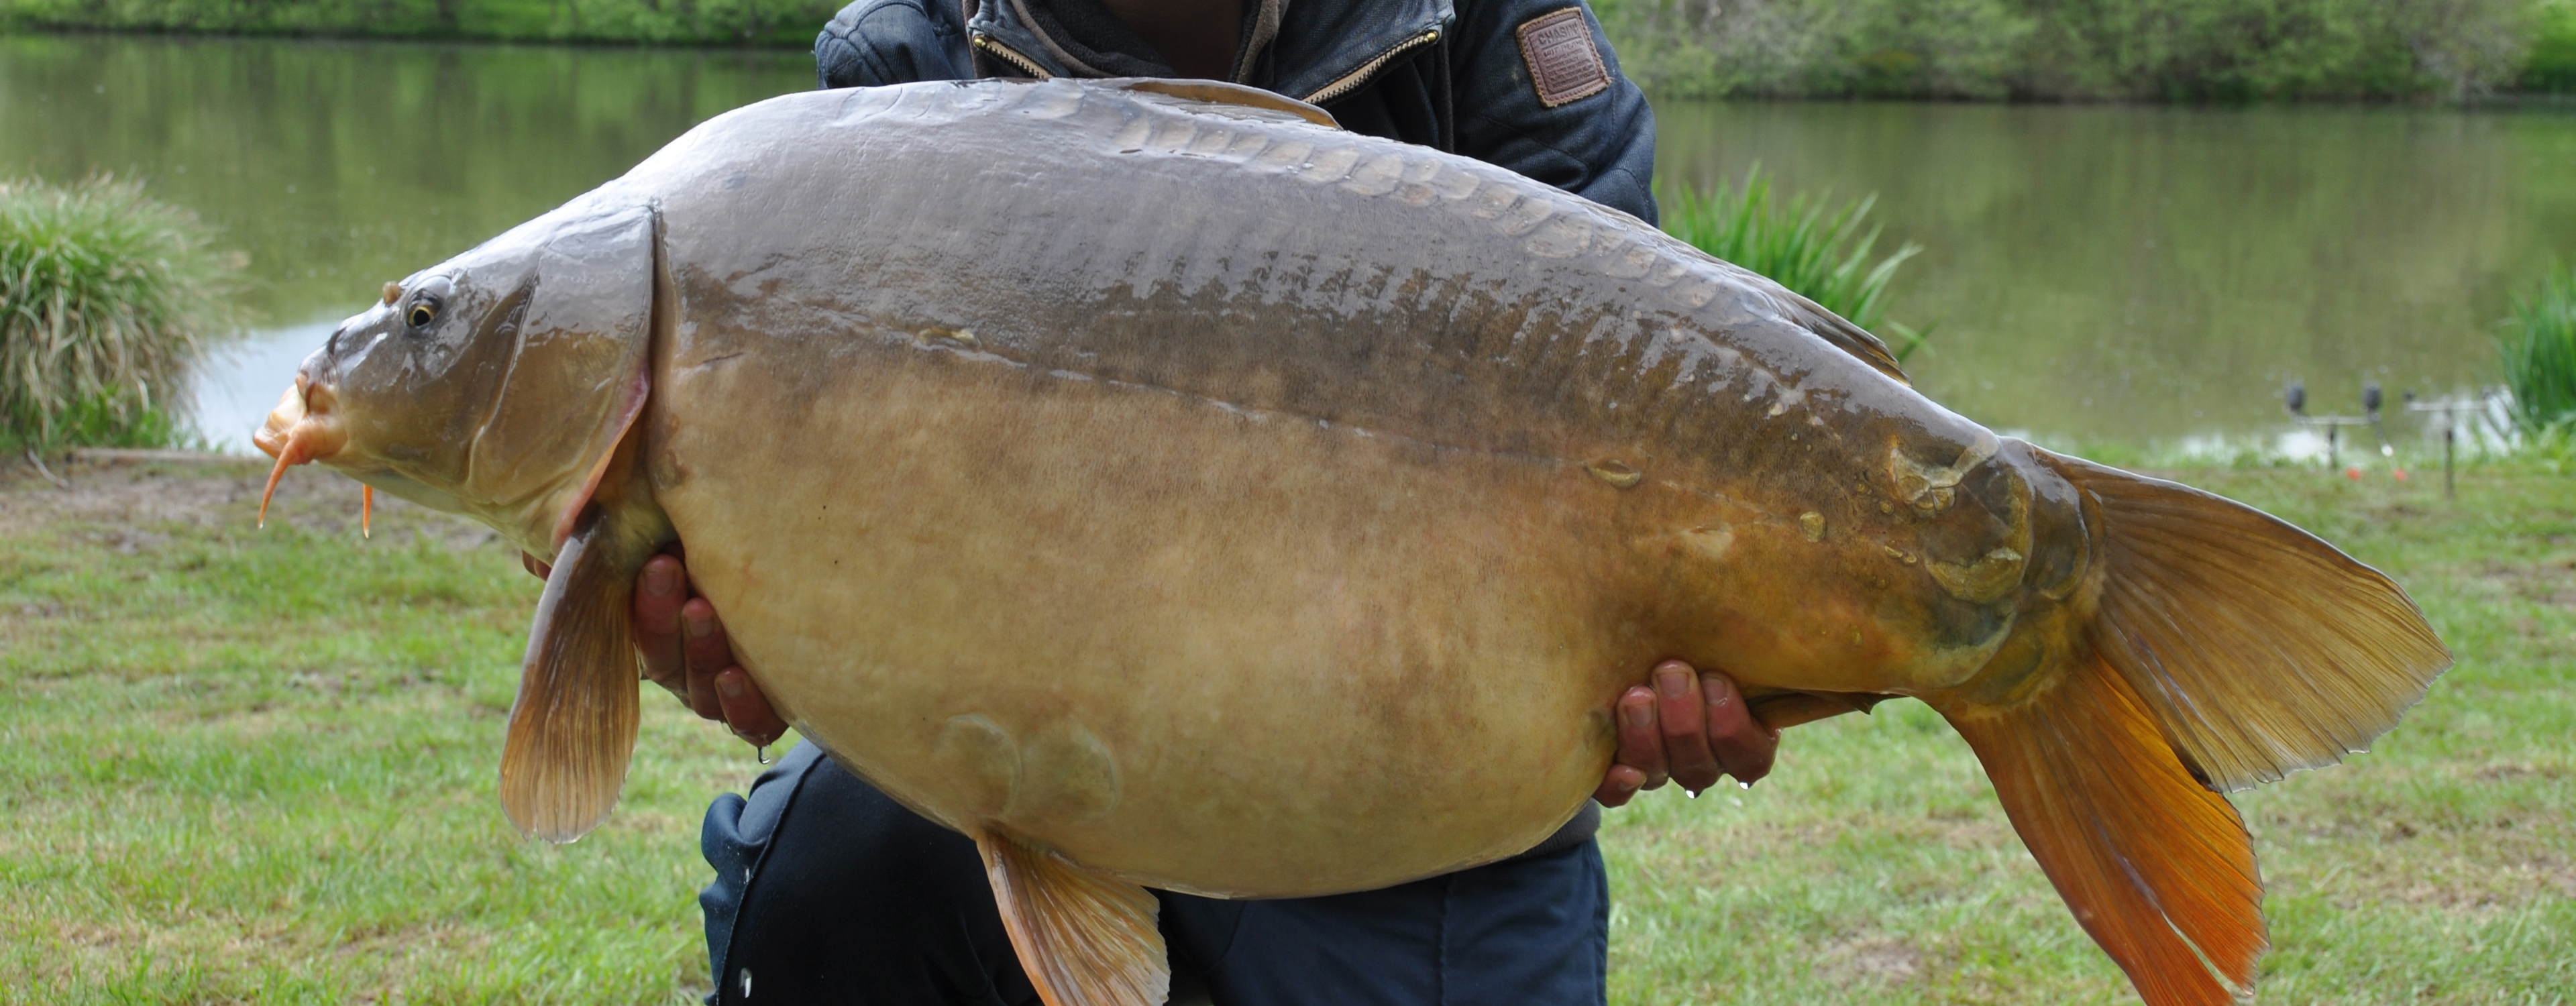 Large mirror carp caught at Etang de Azat-Chatenet fishing lake in France